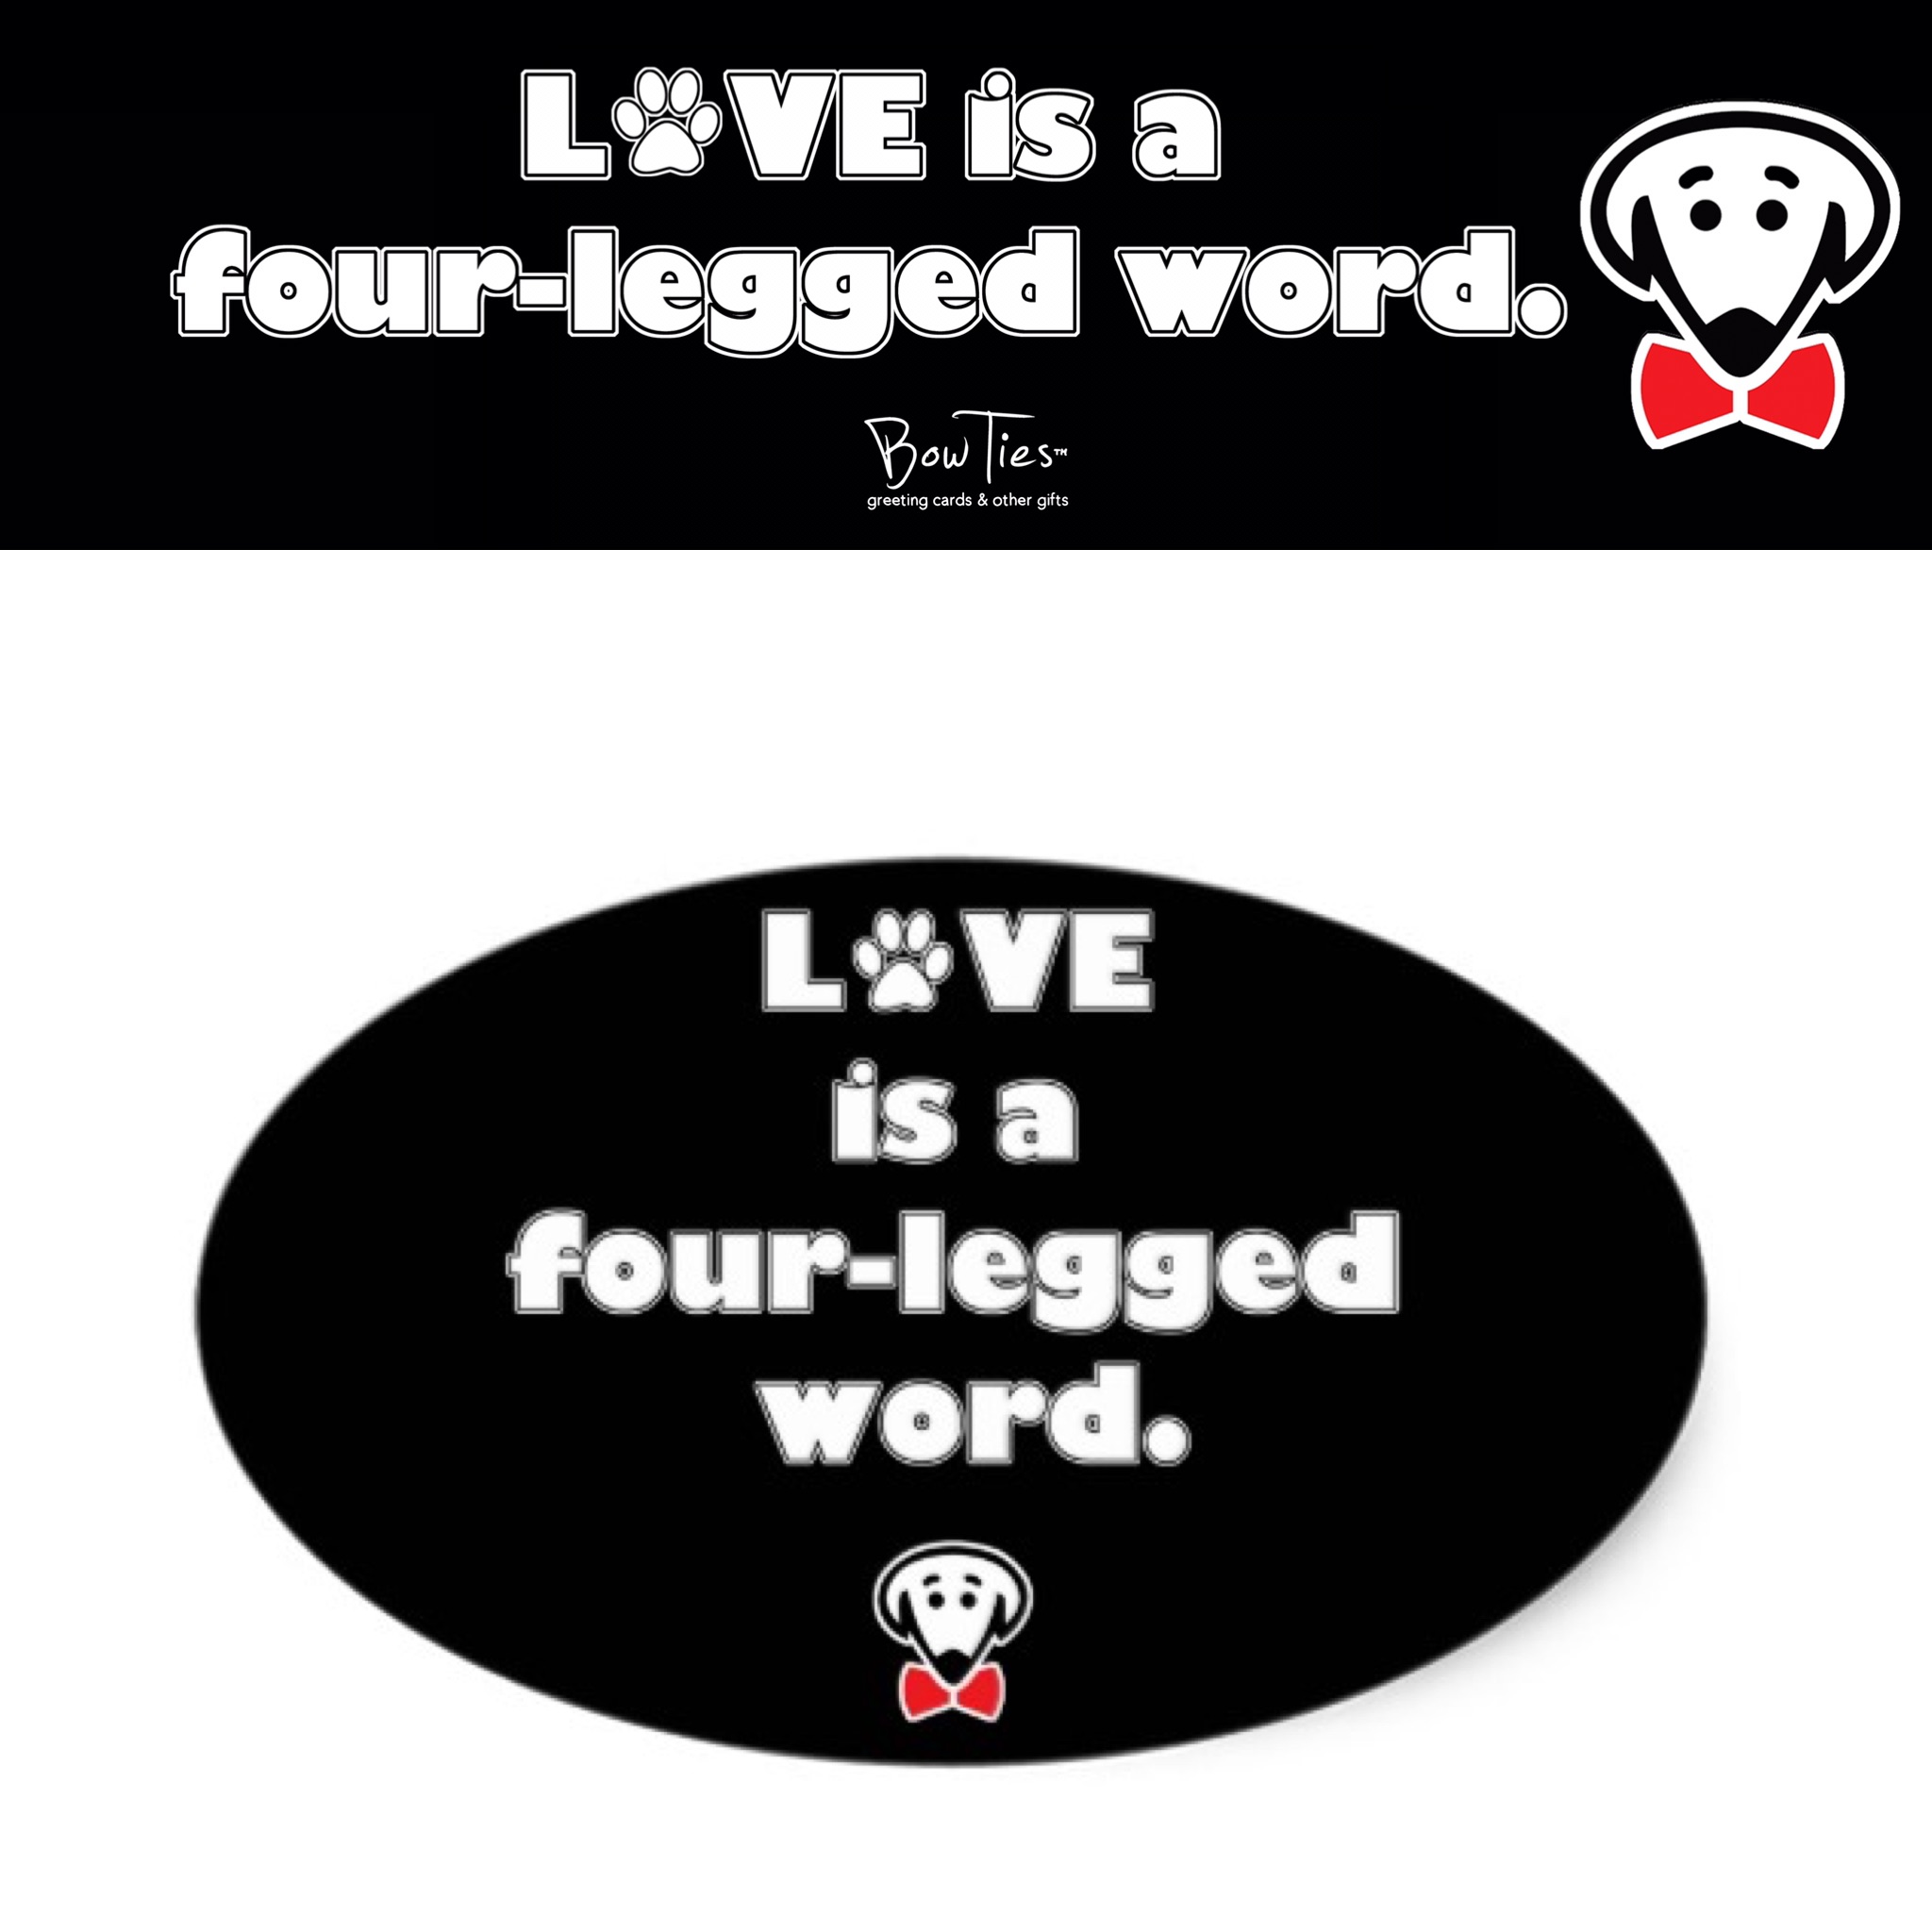 love is a four-legged word both